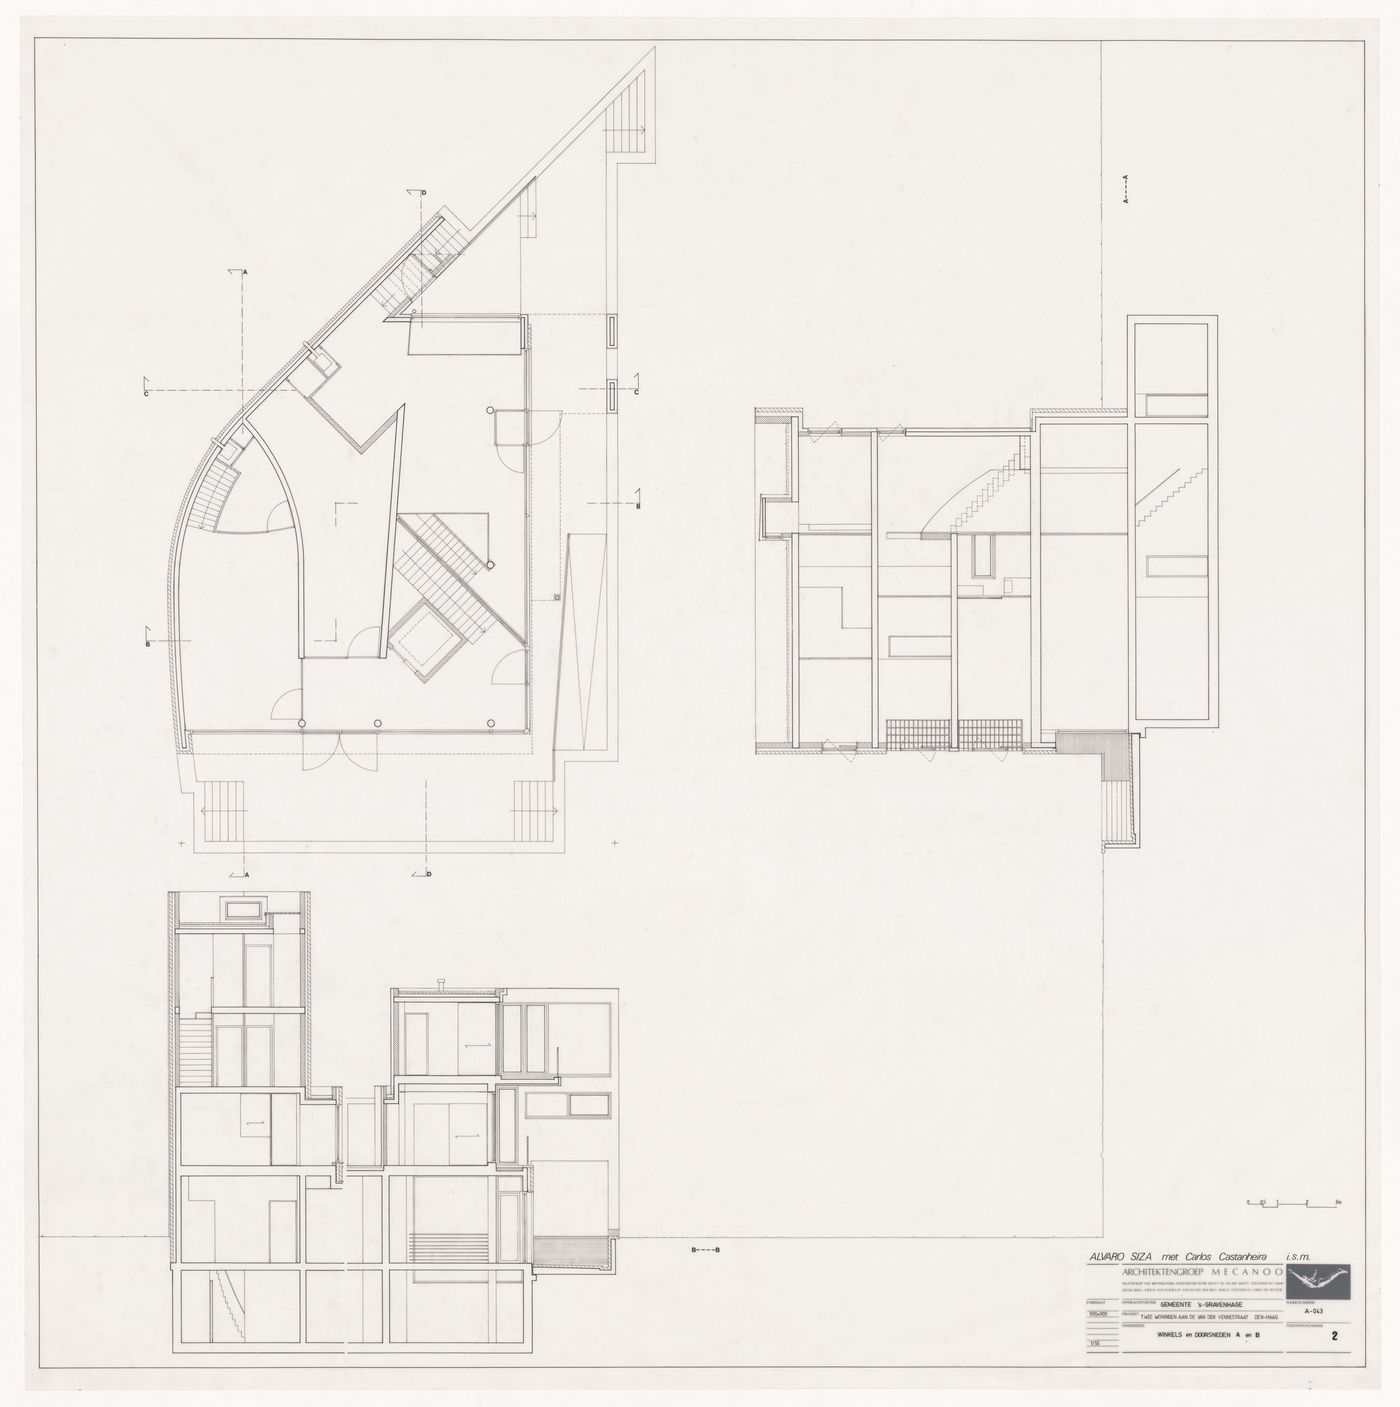 Plan and sections for Duas habitações e duas lojas [Housing and shopping complex, Schilderswijk], The Hague, The Netherlands